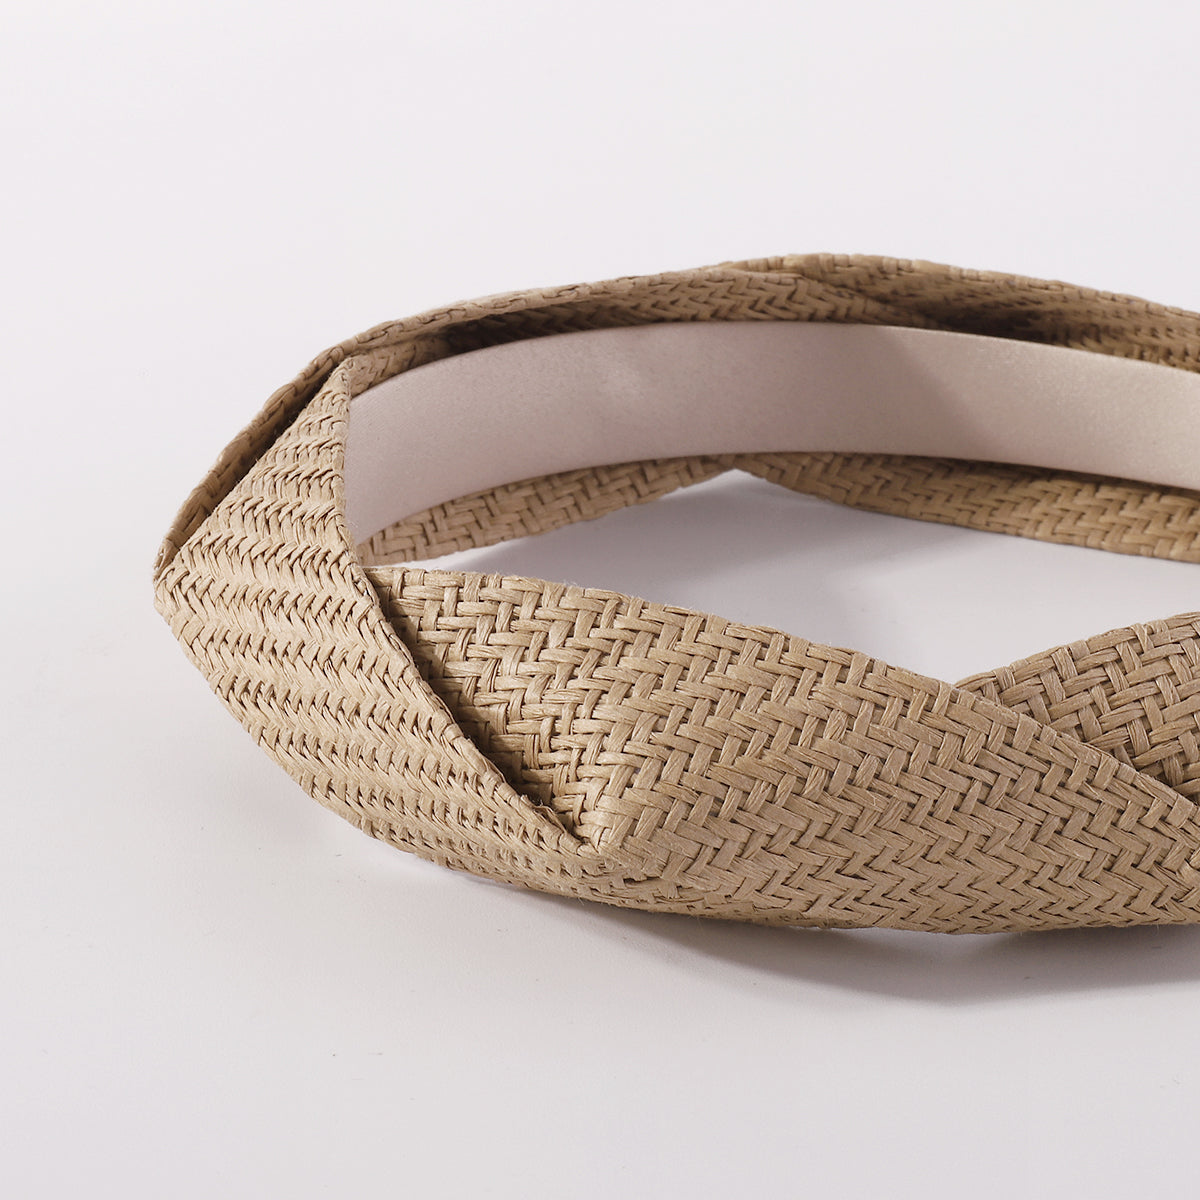 Summer Handmade Straw Woven Braided Headband medyjewelry